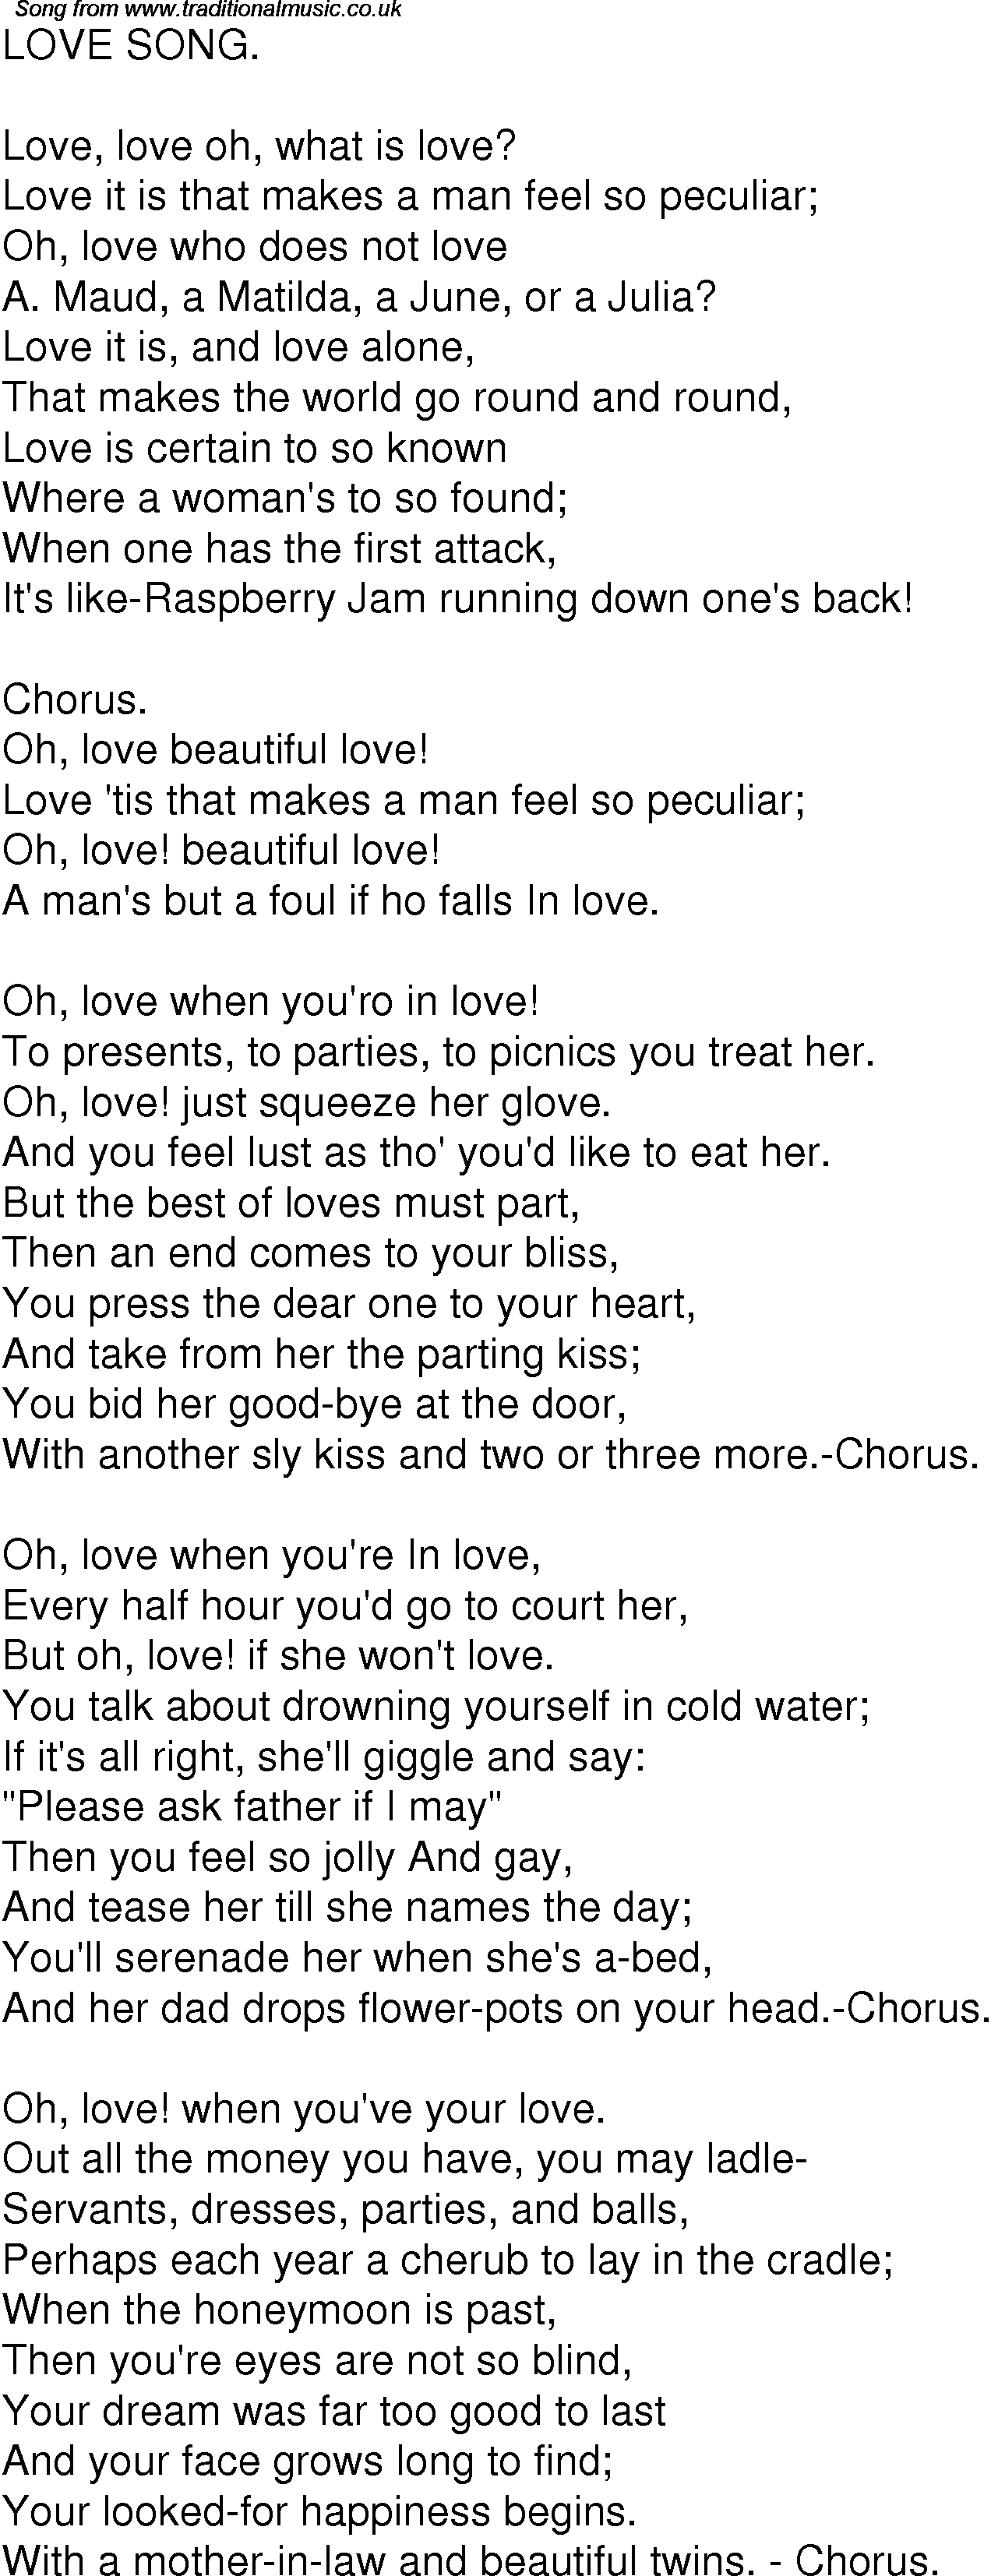 love lyrics